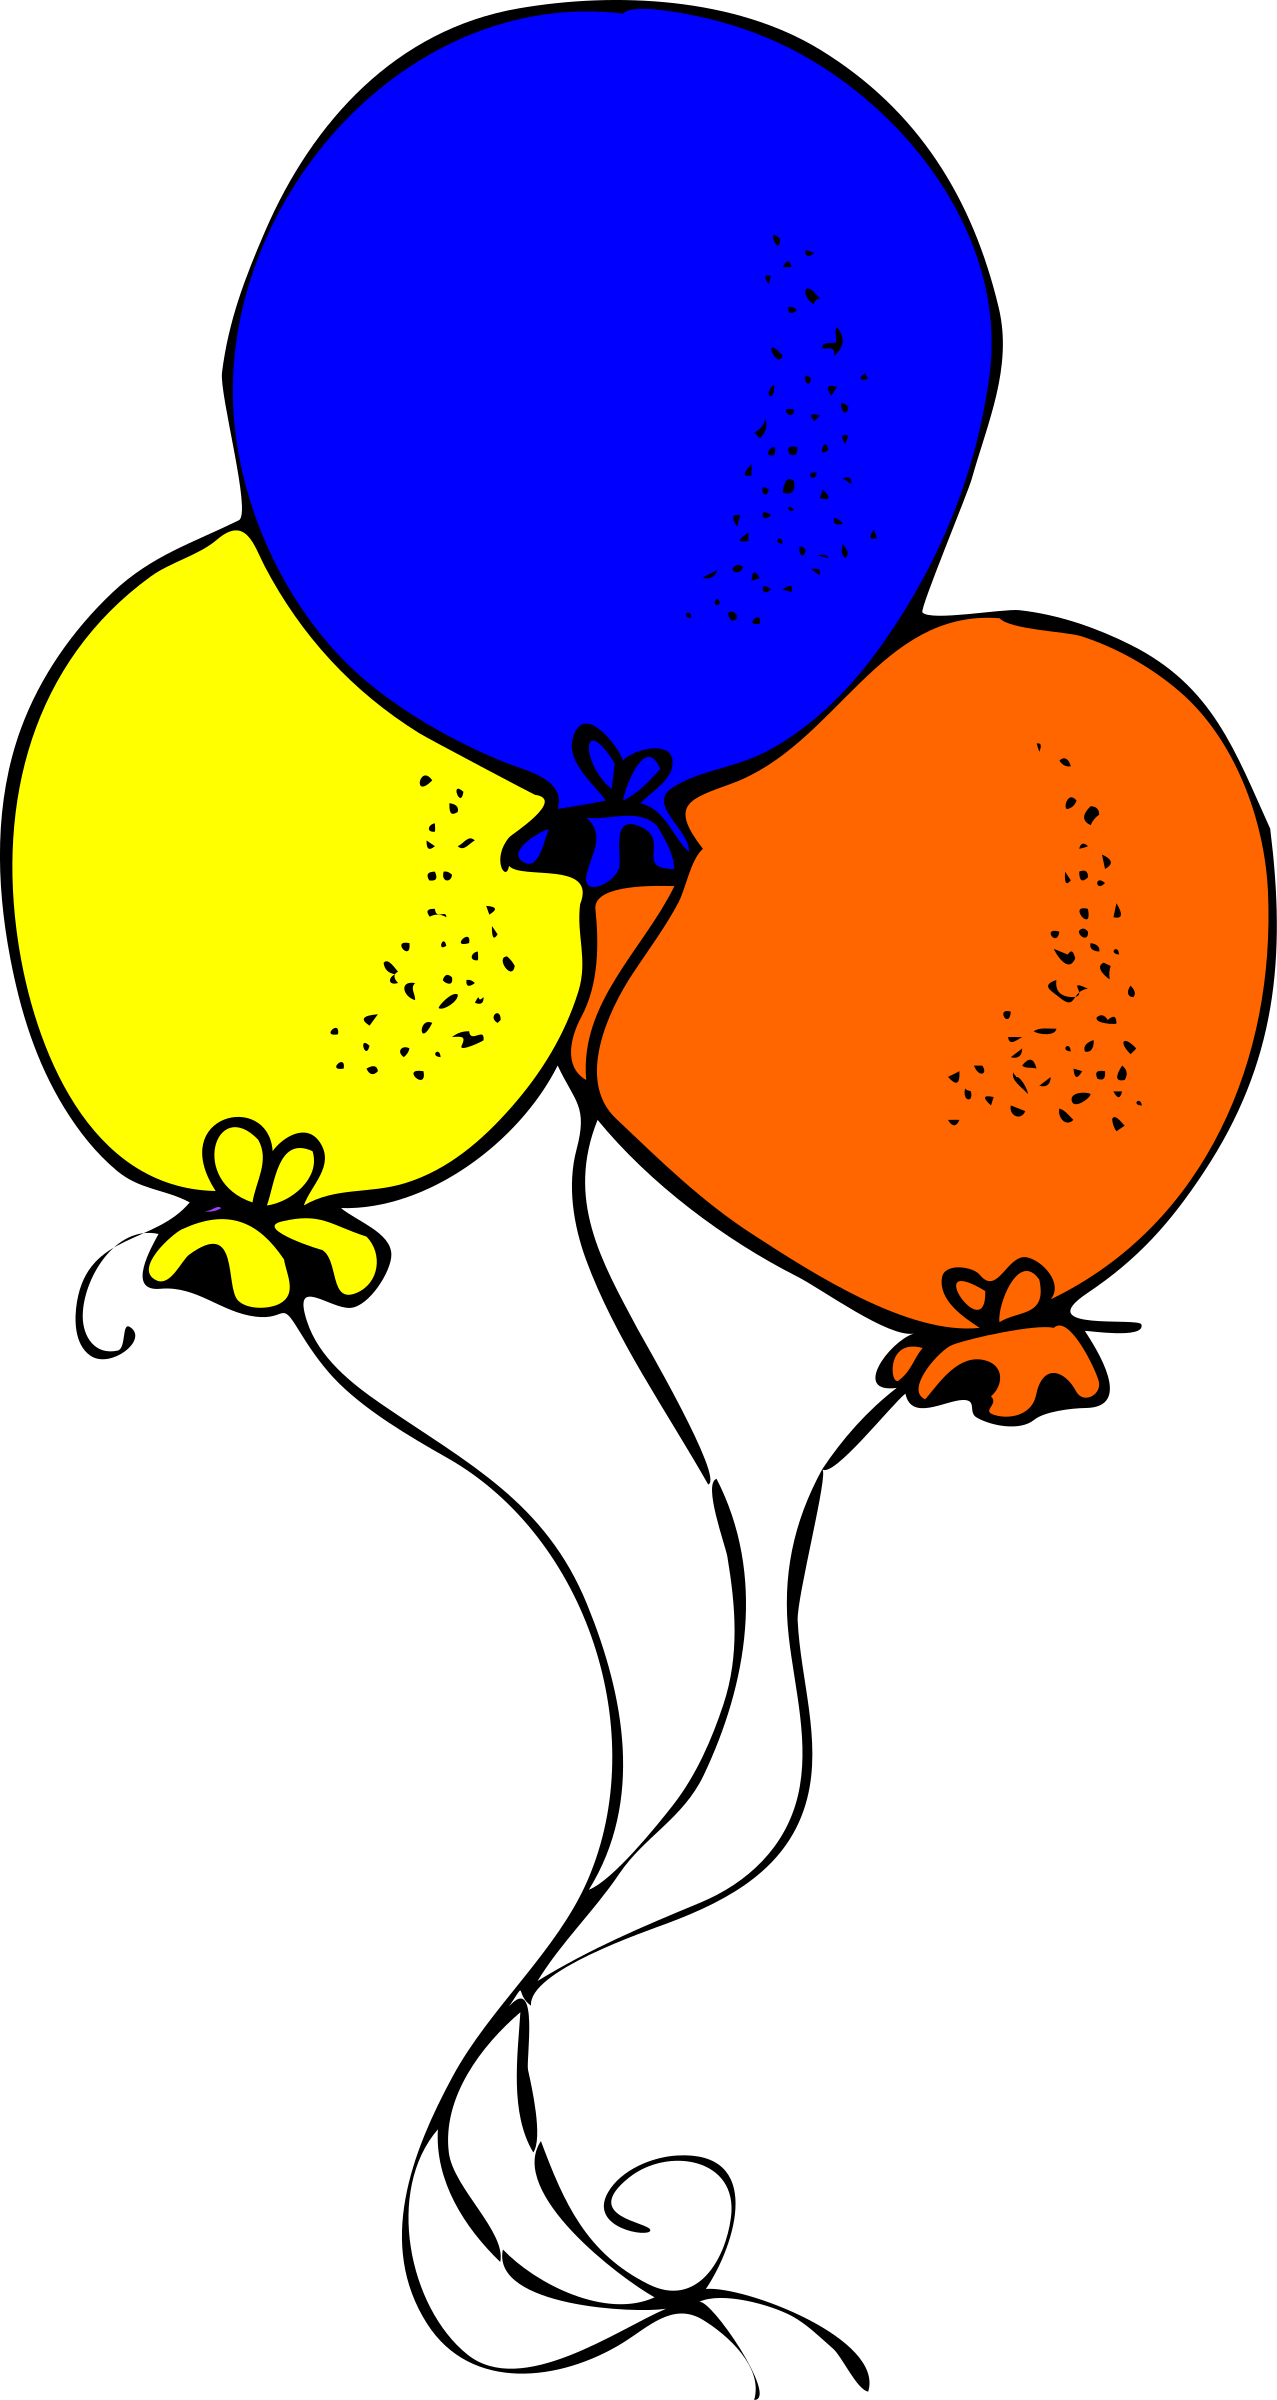 Clipart balloon orange. Blue and yellow balloons